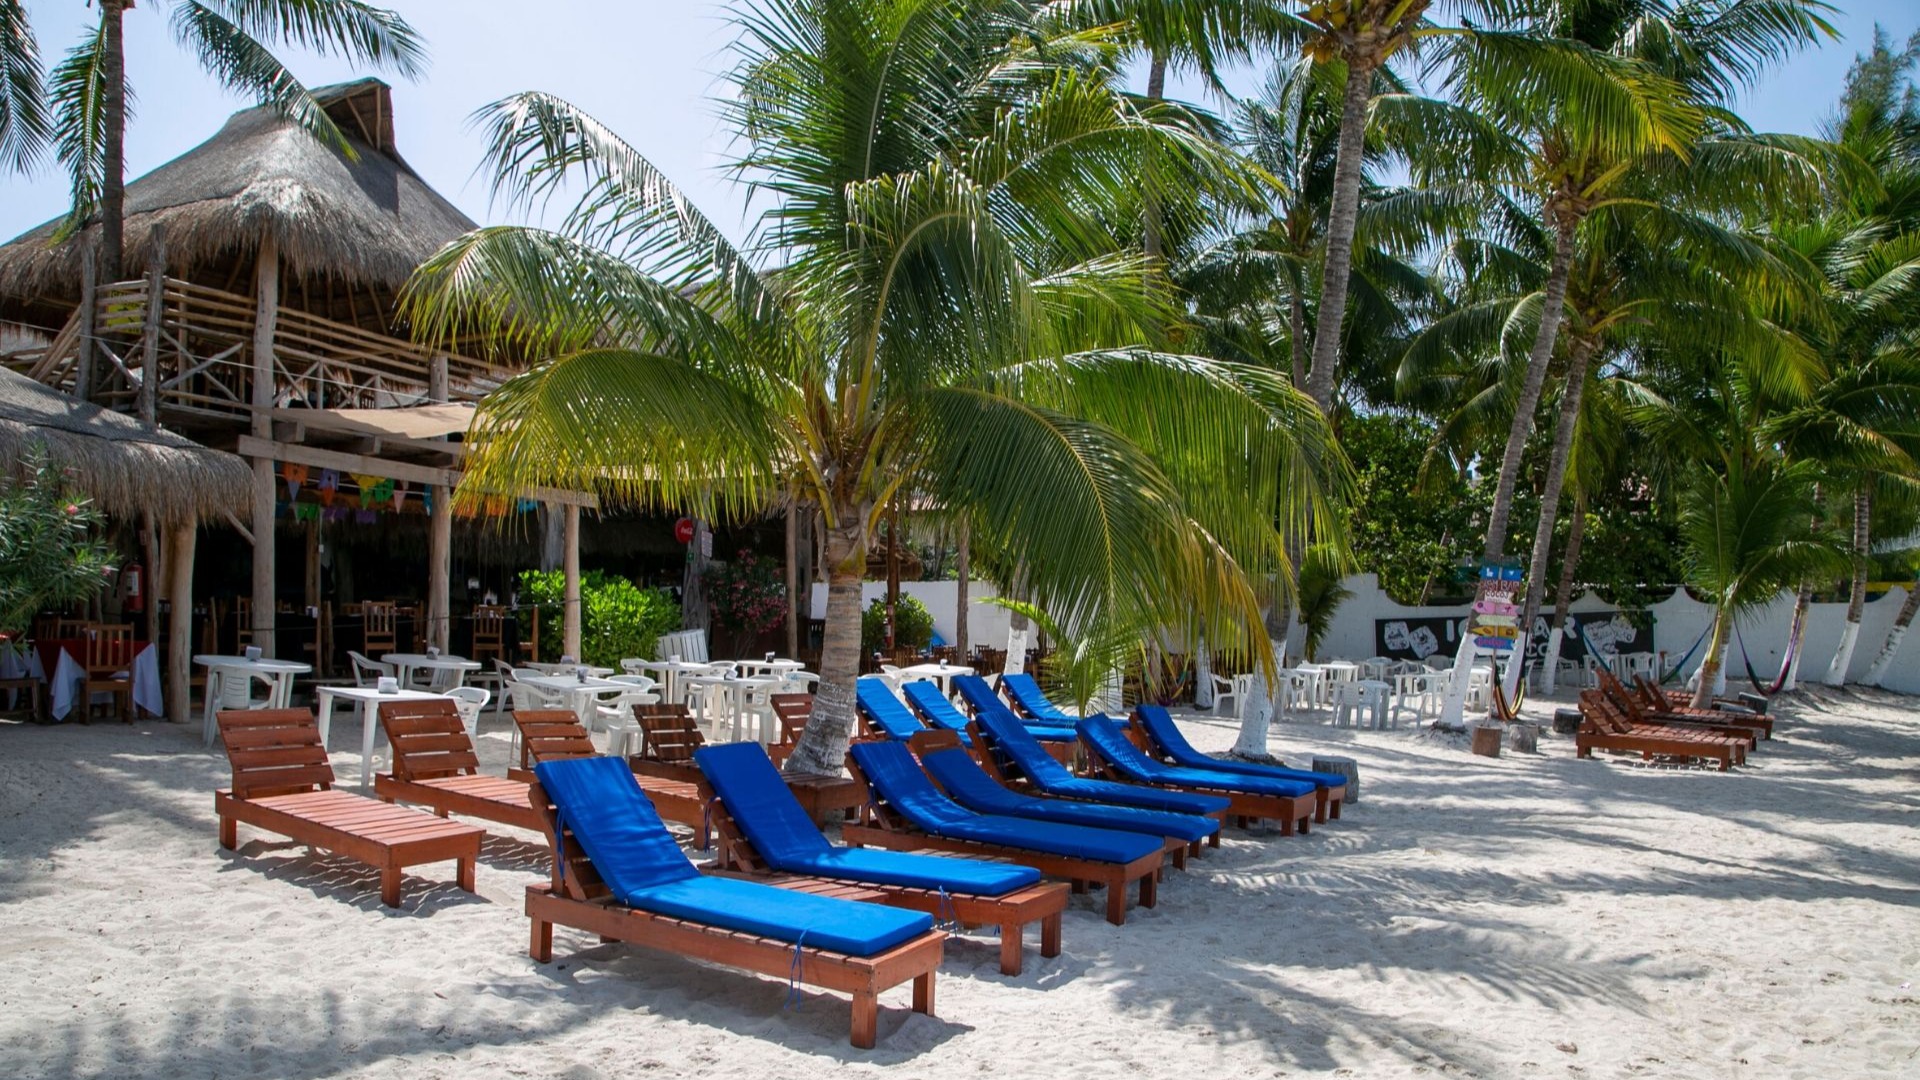 01 - LoRes - Beach club - Playa Mexico - Ice Bar Isla Mujeres - Beach relaxing